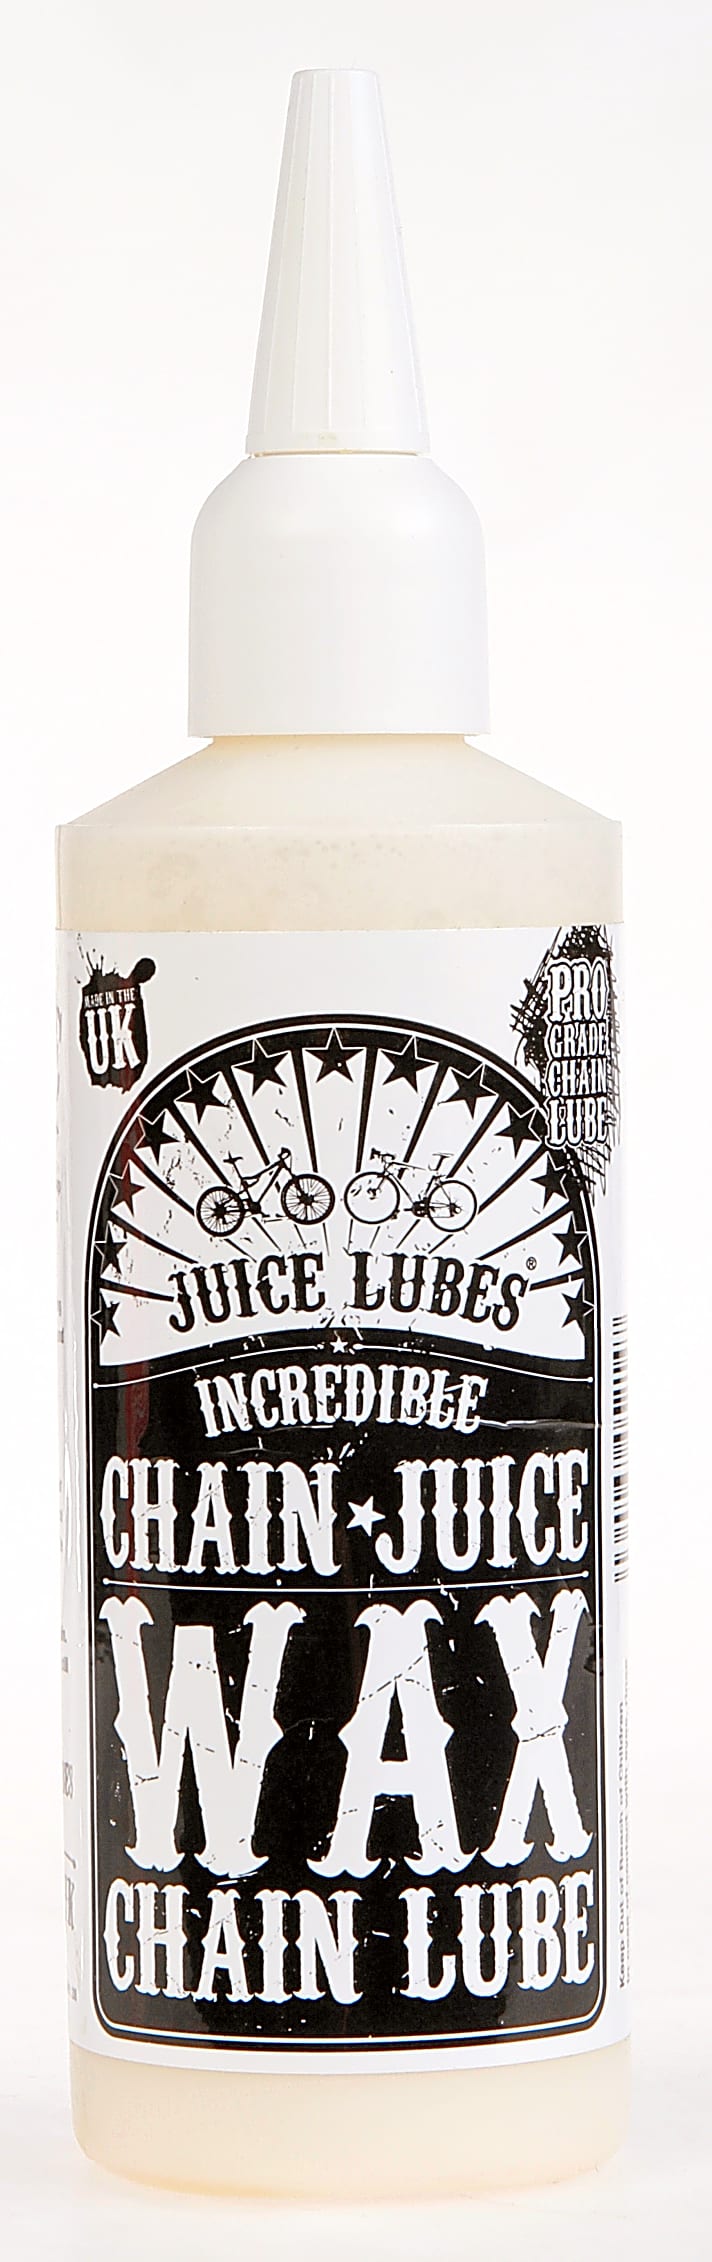   Juice Lubes Chain Juice Wax